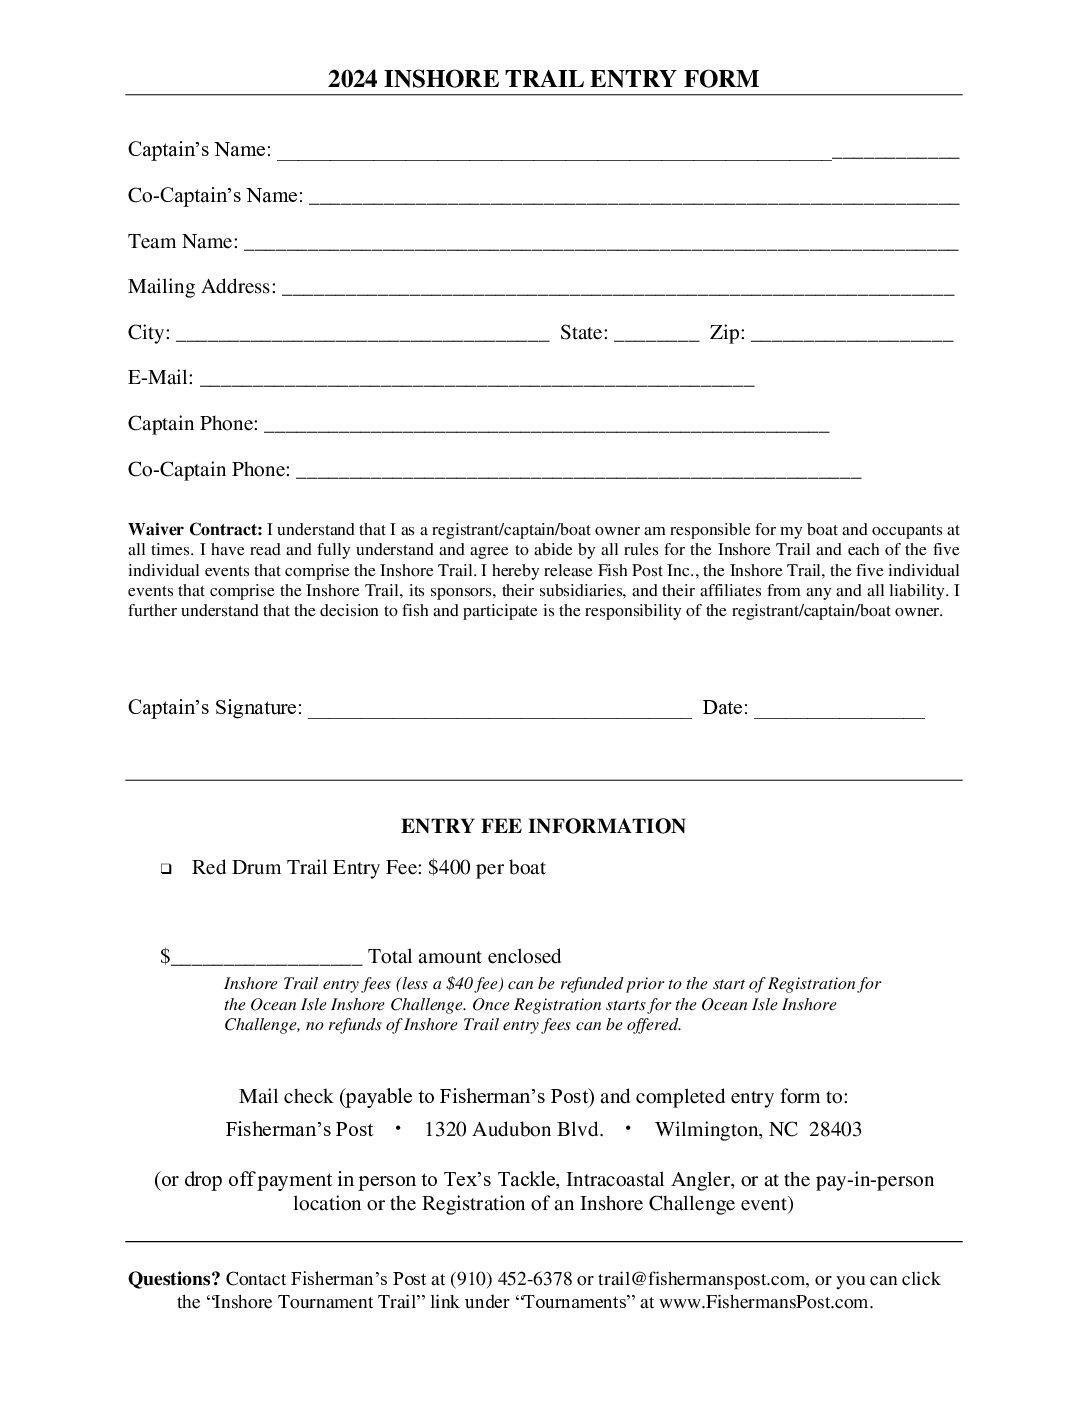 2024 Inshore Tournament Trail Print Entry Form